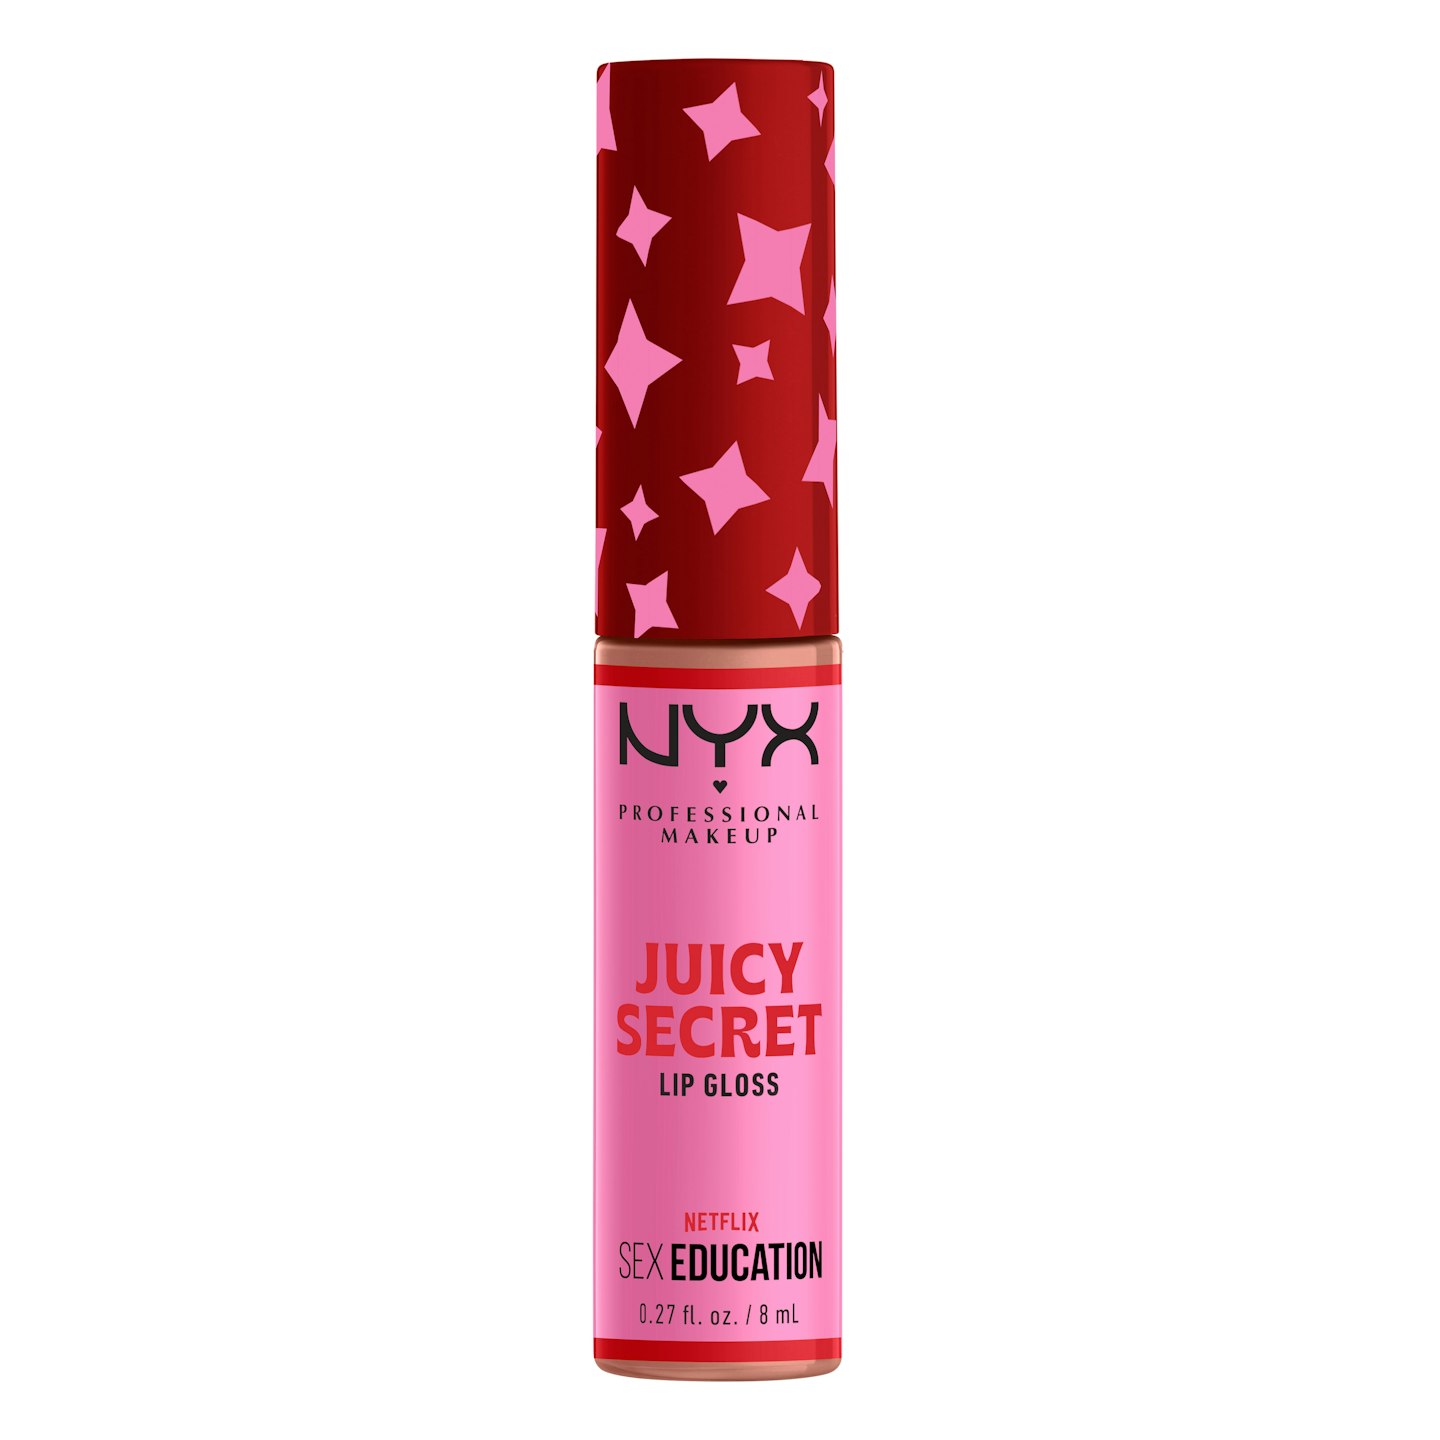 NYX Professional Makeup X Netflix's Sex Education Lip Gloss in Juicy Secret